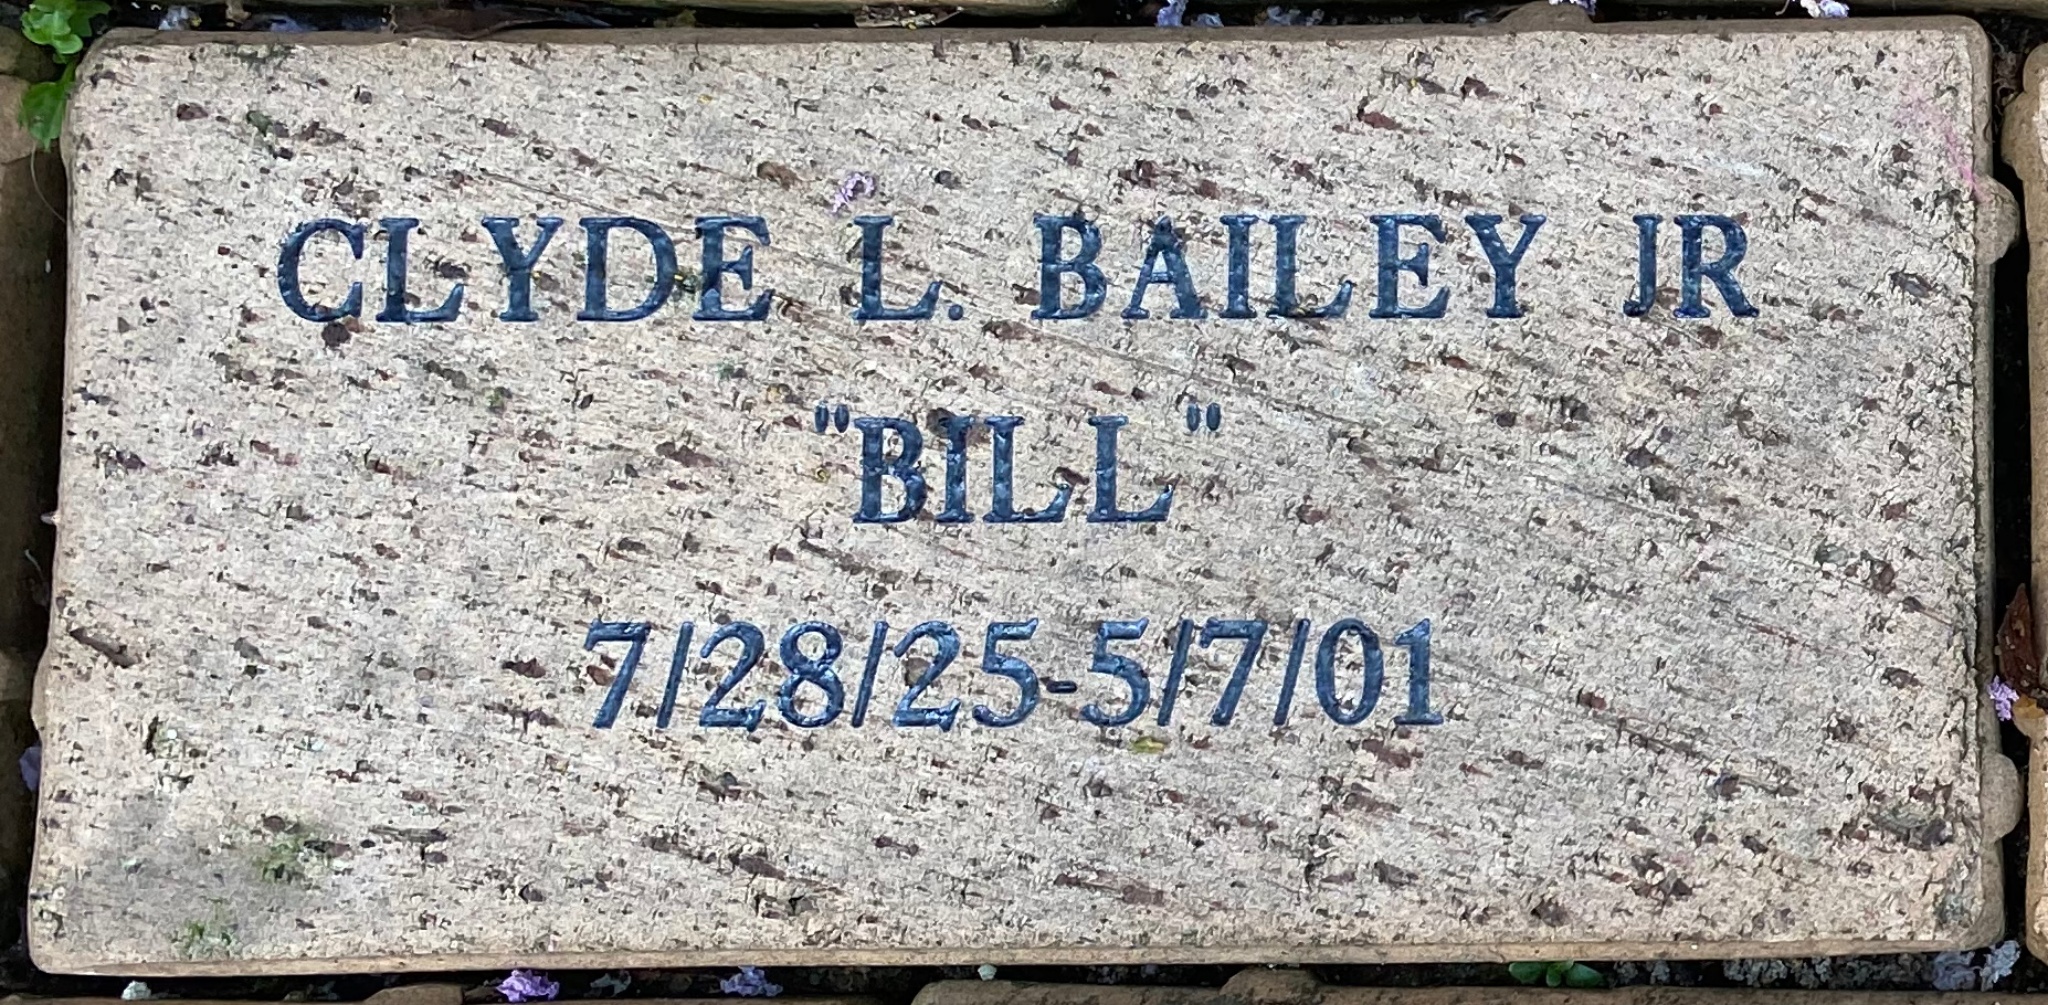 CLYDE L. BAILEY JR “BILL” 7/28/25 -5/7/01